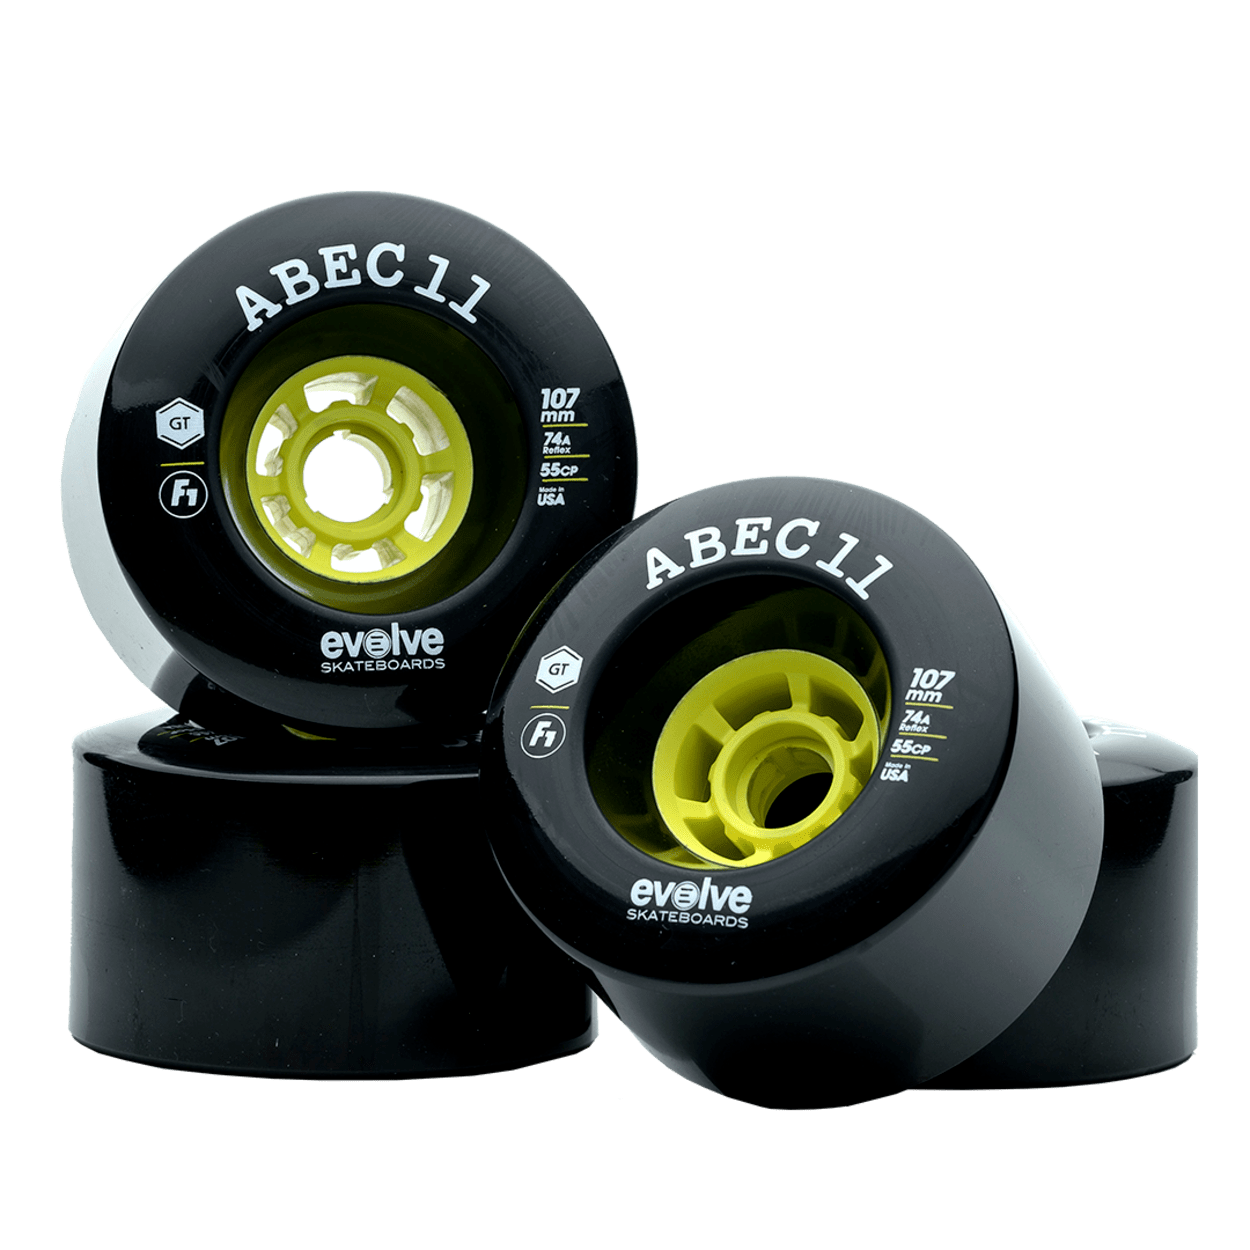 Evolve Skateboards F1 Street Wheels 500019 - Boosted